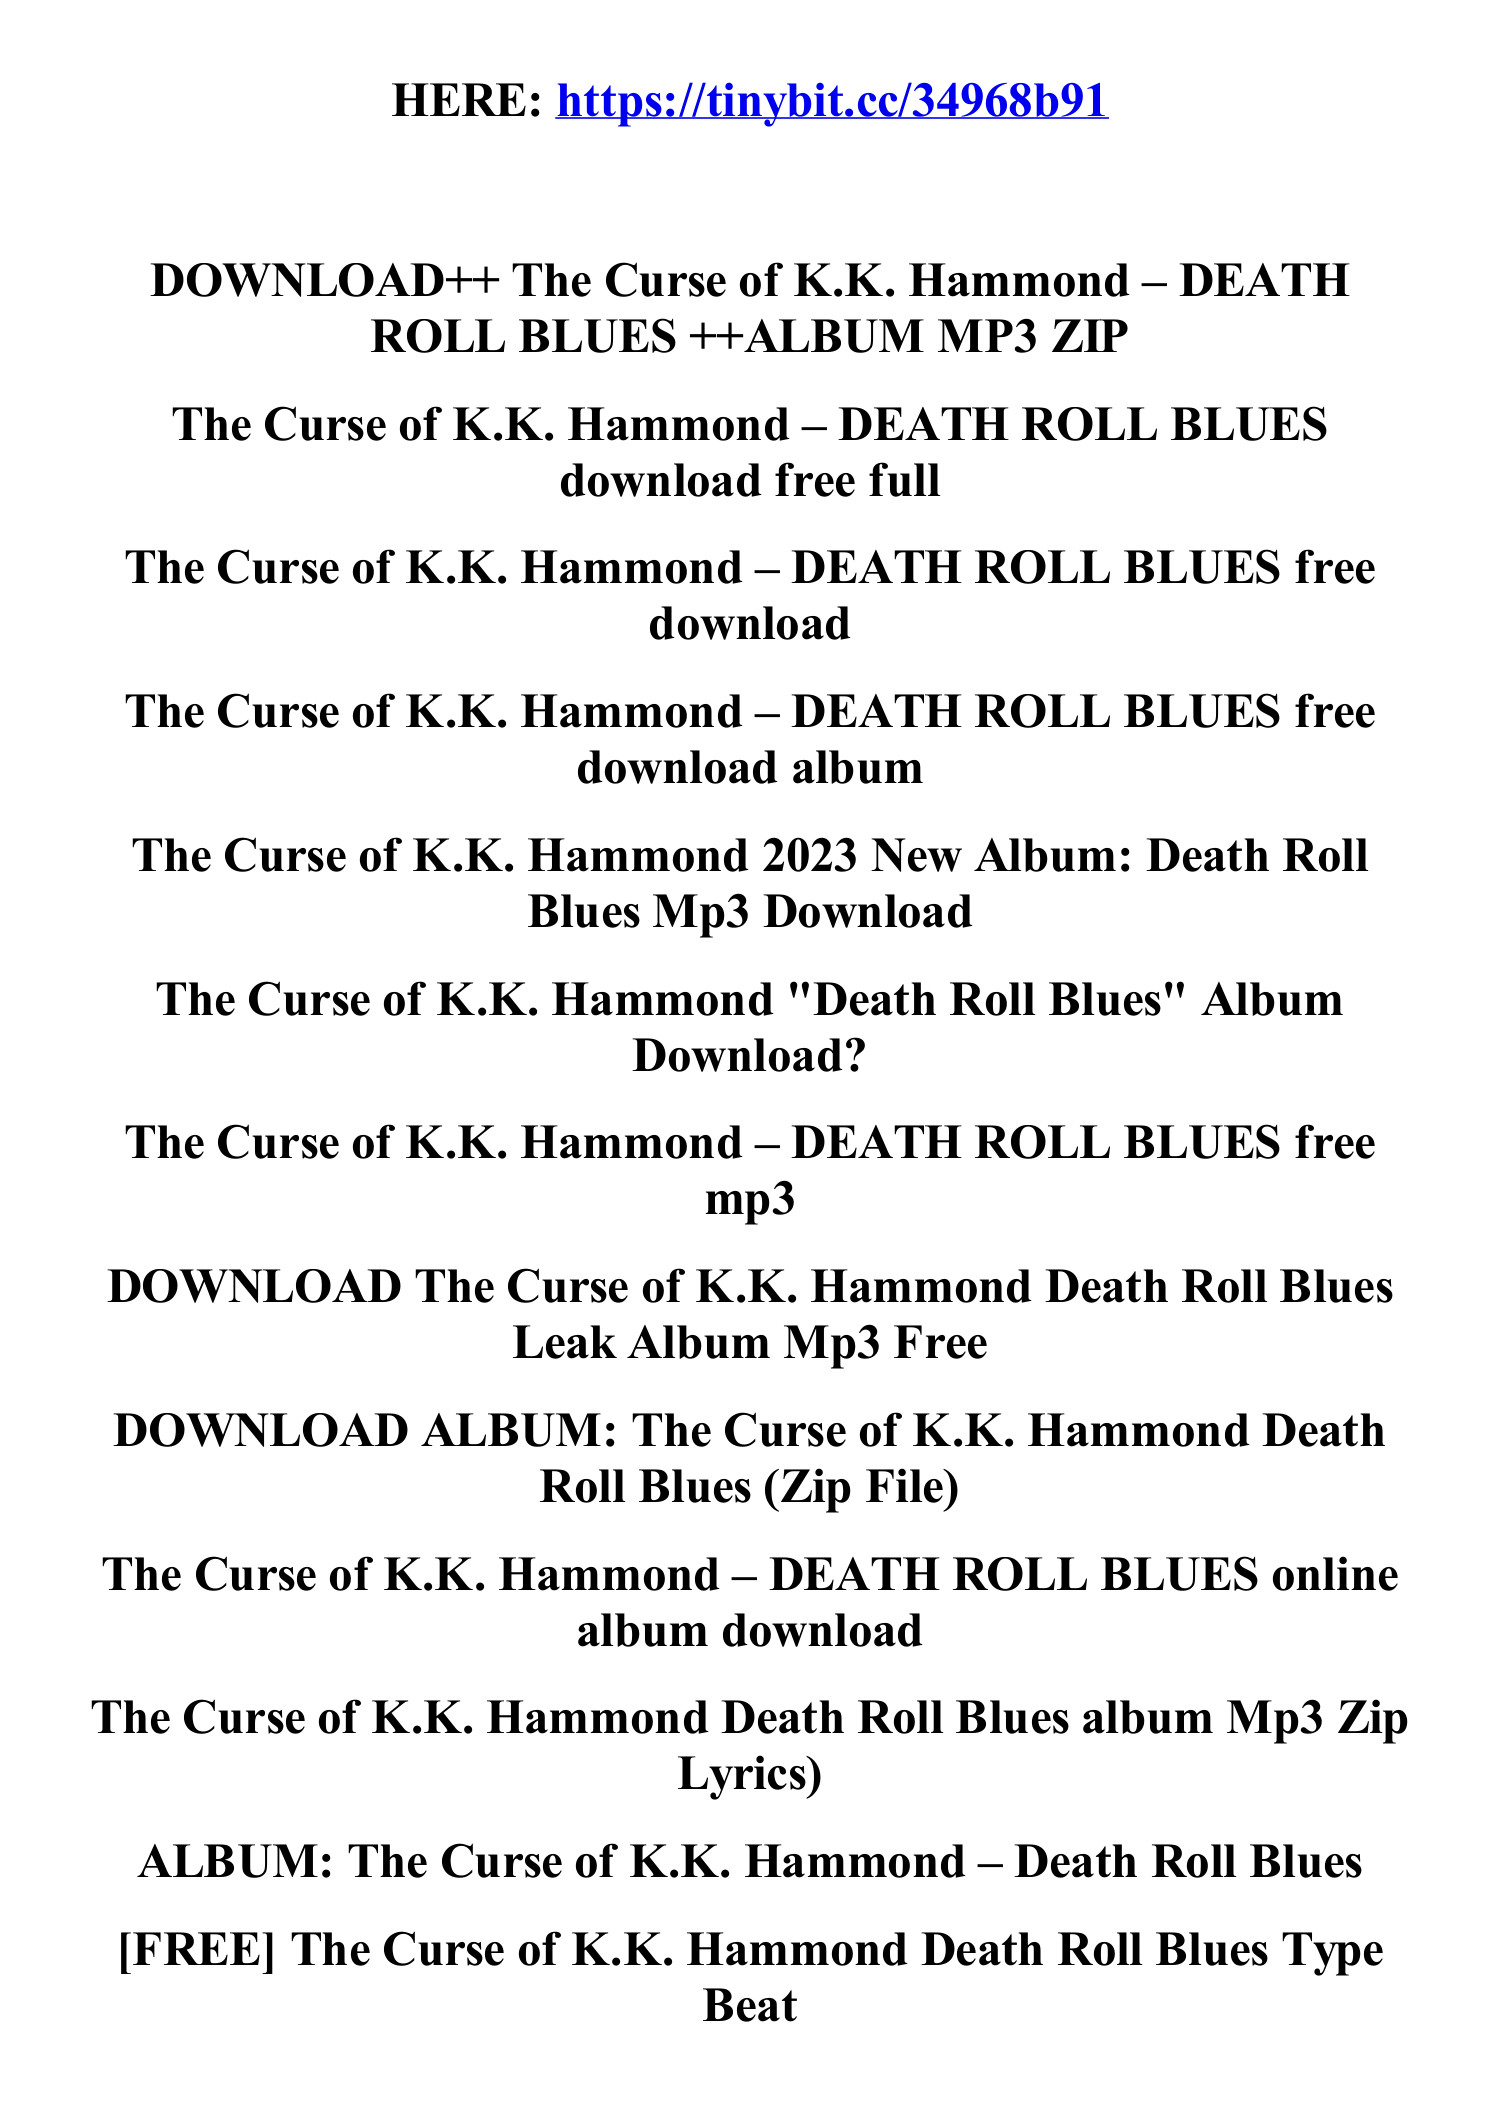 download_the_curse_of_k_k_hammond_death_roll_blues_album_mp3_zip